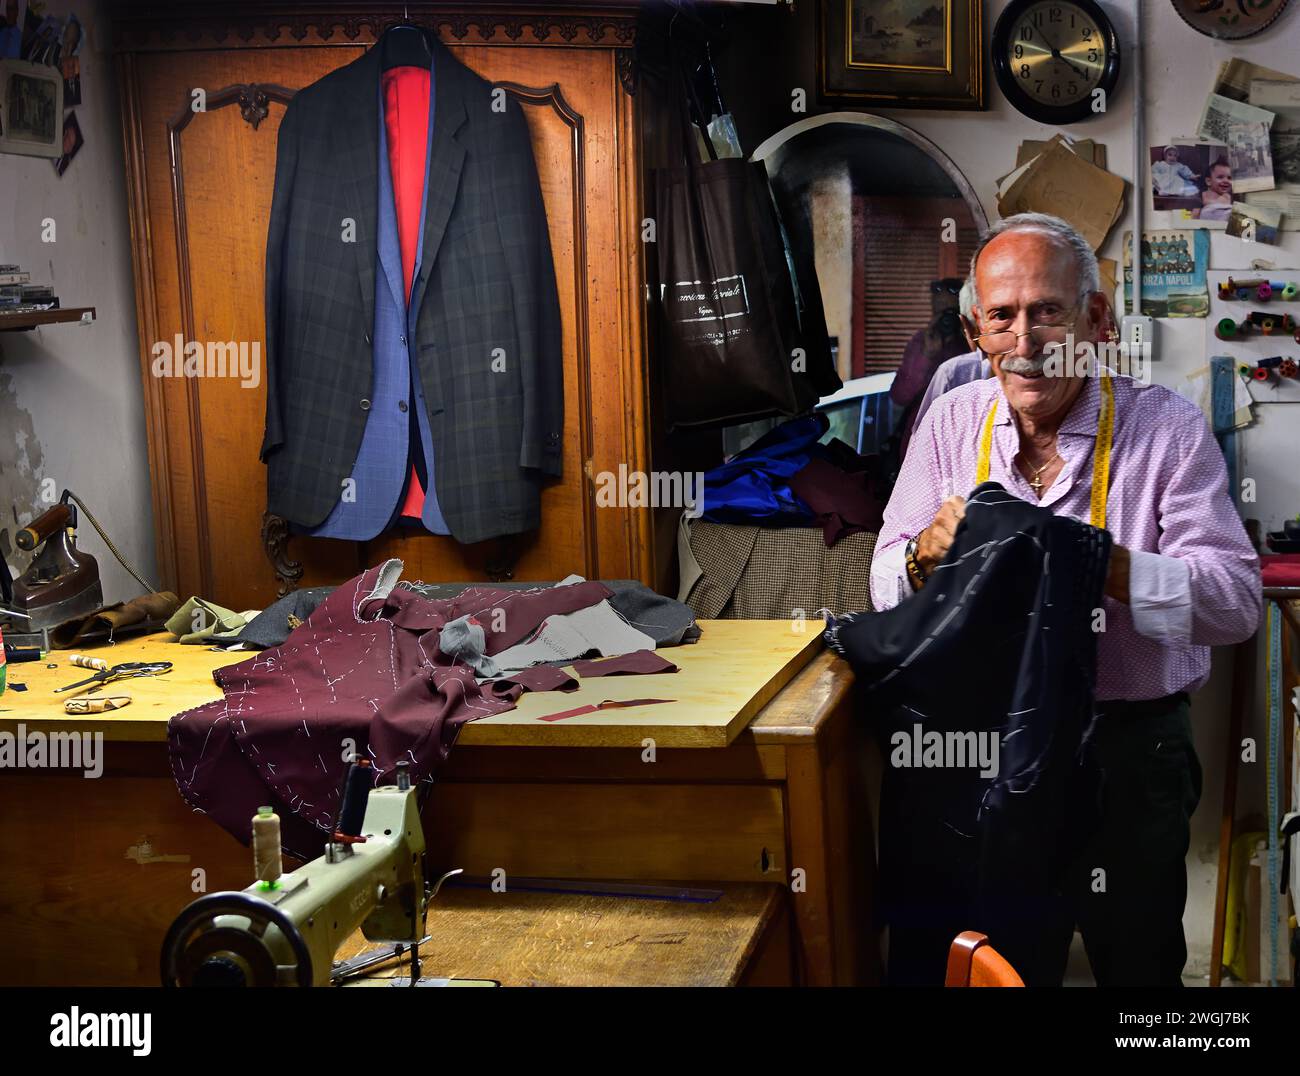 Old man Tailor, Fashioner, nei quartieri spagnoli, Napoli, Napoli, Italia, Foto Stock